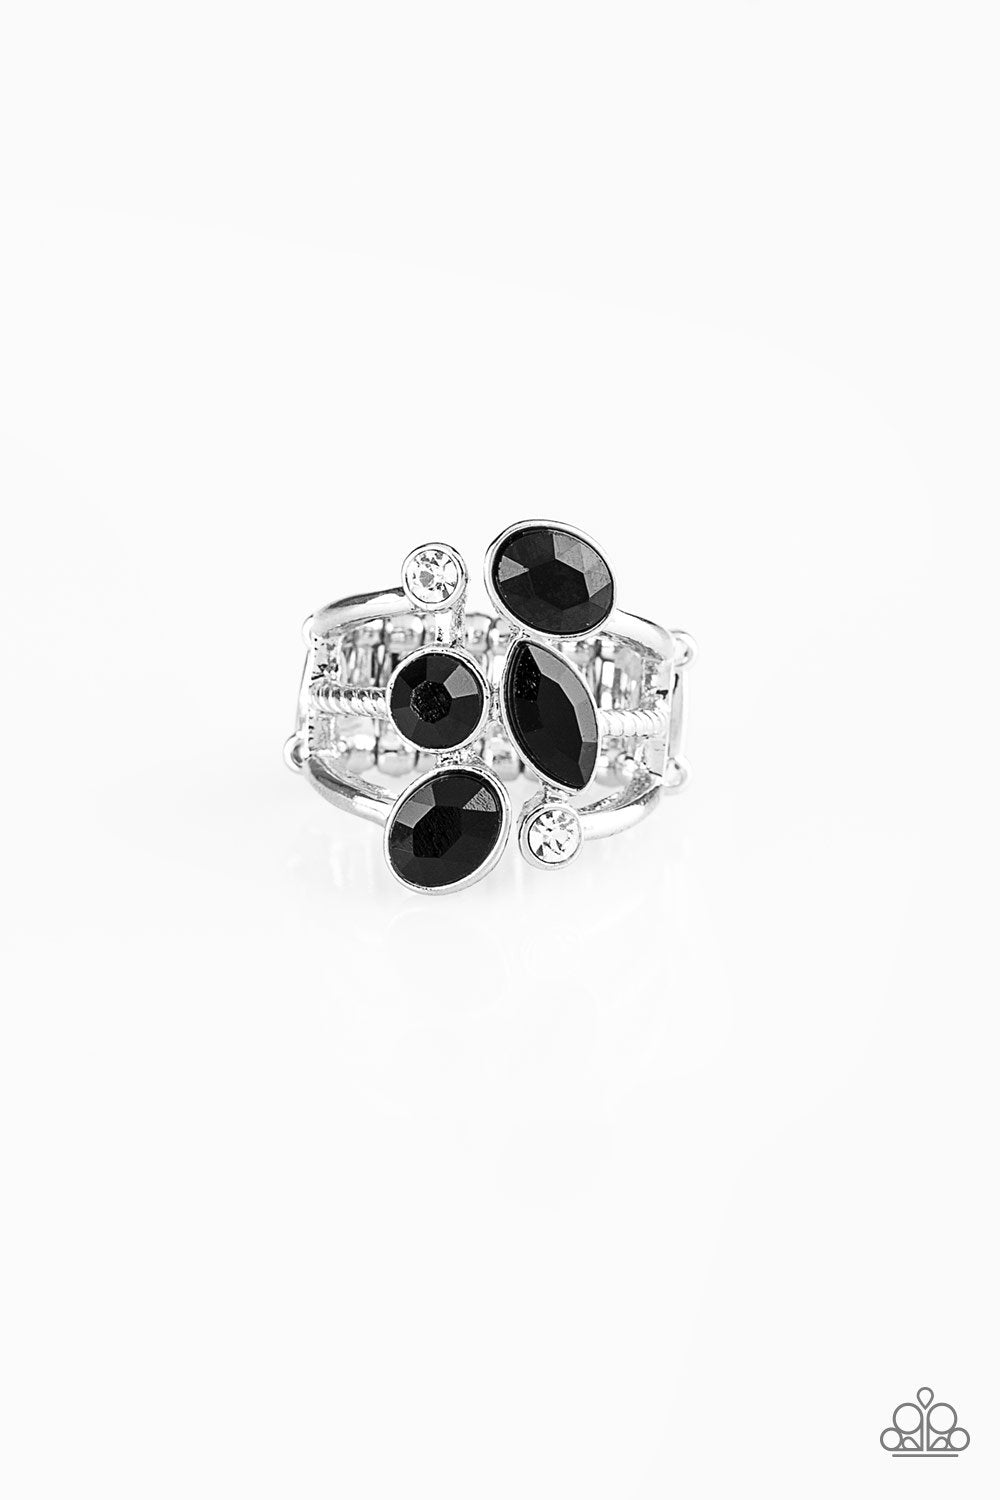 Metro Mingle Black and White Rhinestone Ring - Paparazzi Accessories - lightbox -CarasShop.com - $5 Jewelry by Cara Jewels